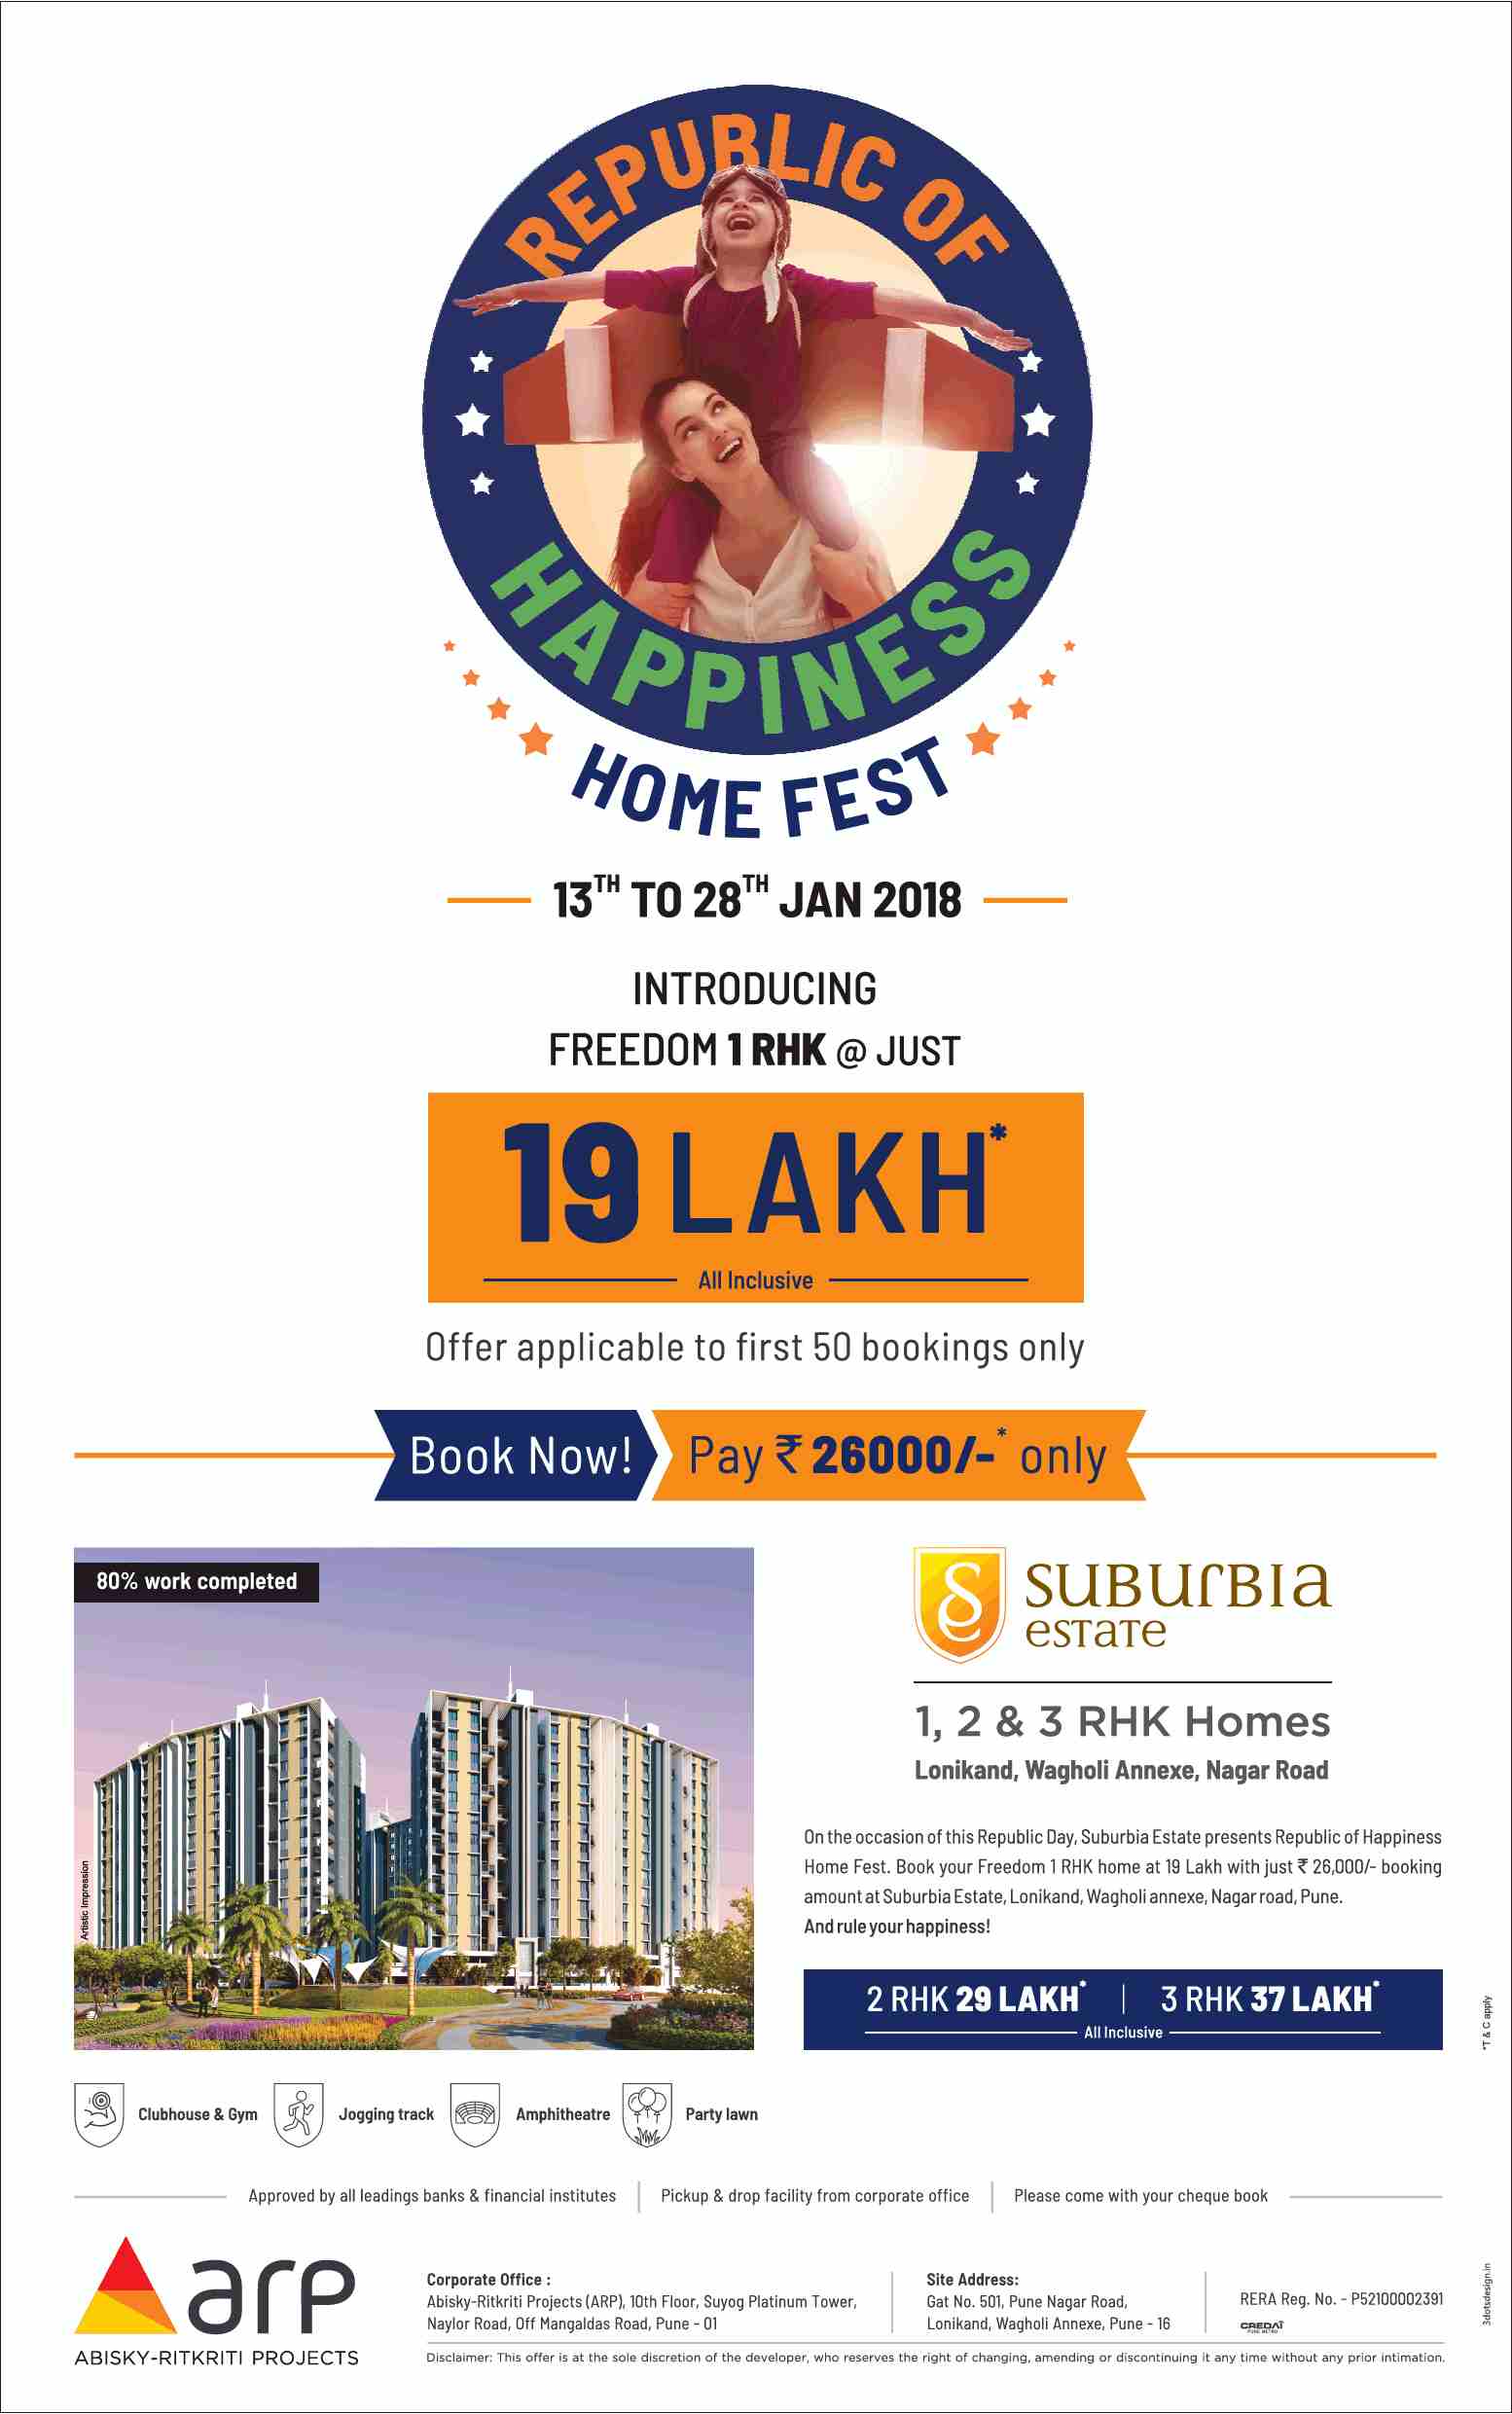 ARP Suburbia Estate presents Republic of Happiness Home Fest in Pune